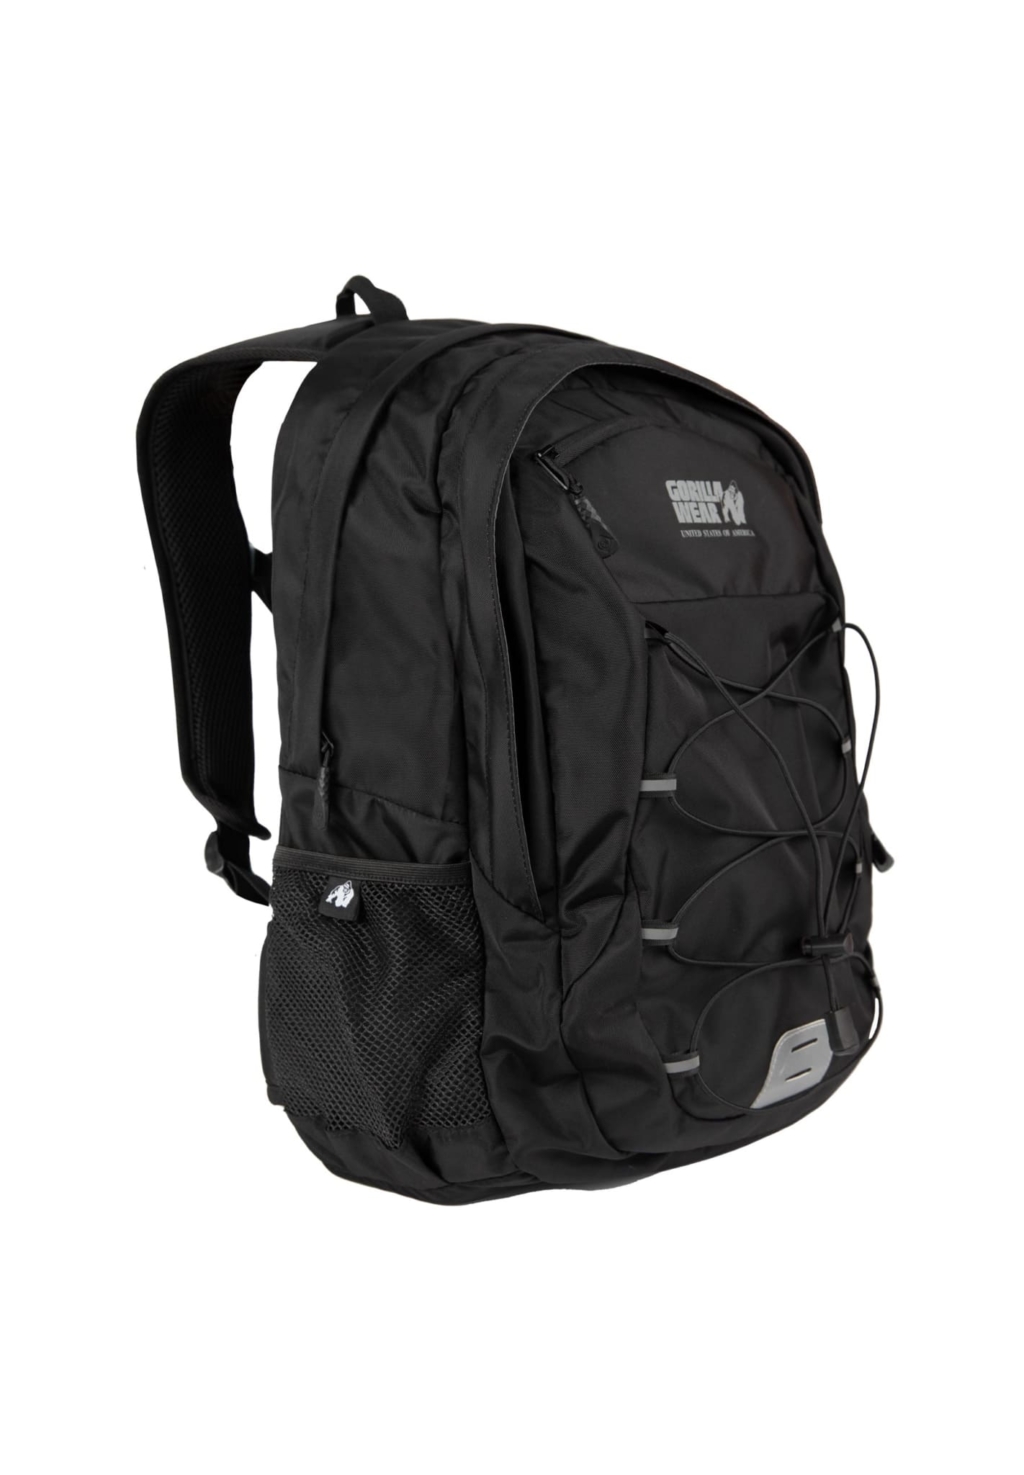 9920190009 lasvegas backpack 01 scaled